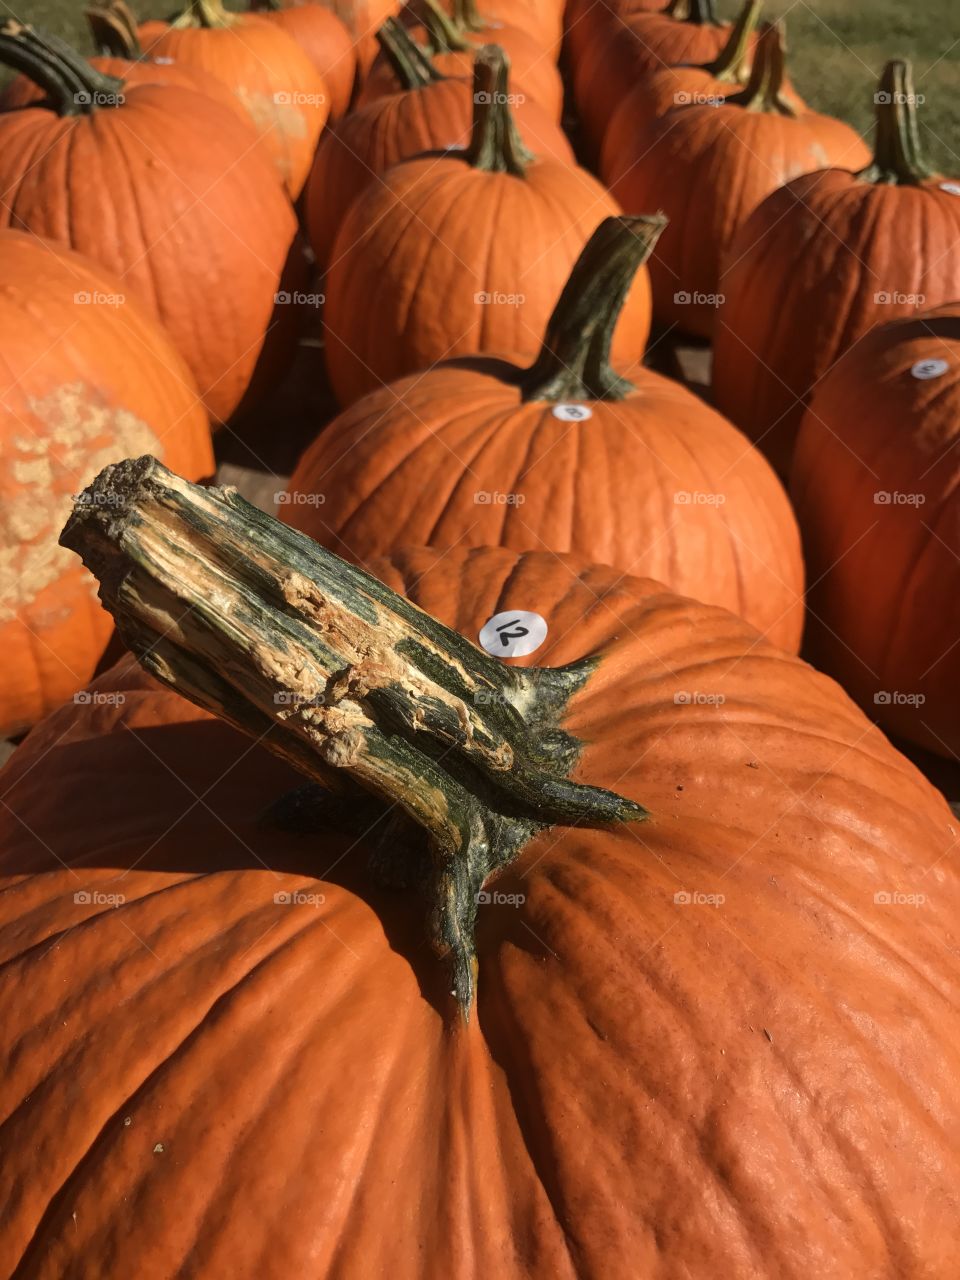 Pumpkins for sale 